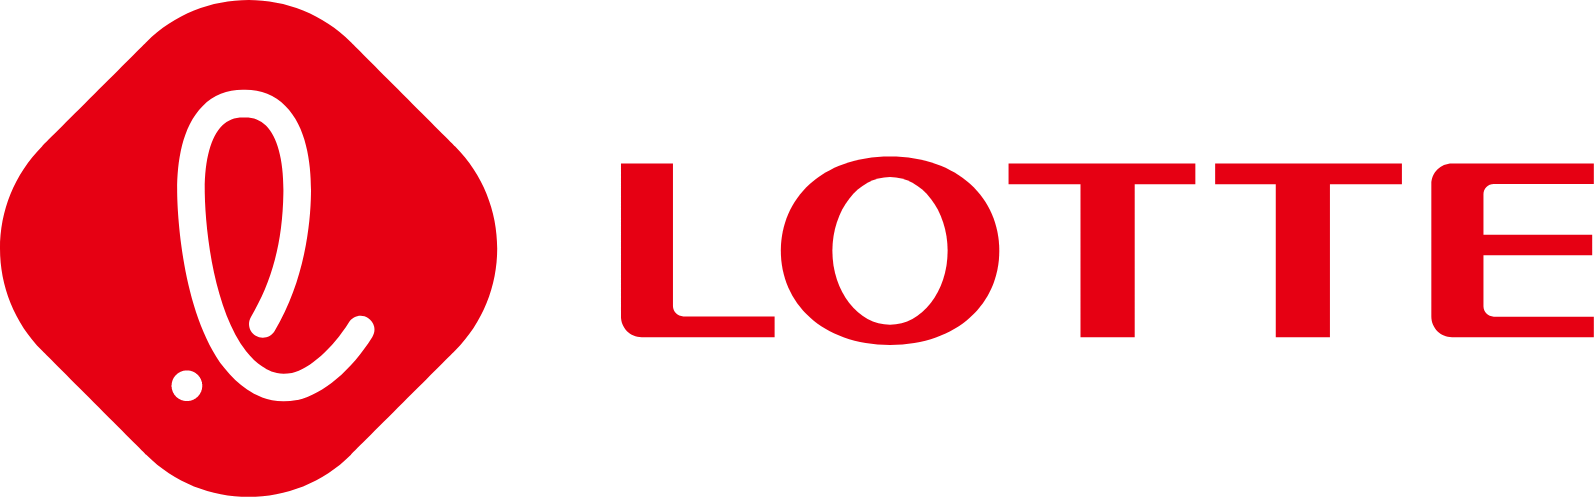 LOTTE Corporation logo large (transparent PNG)